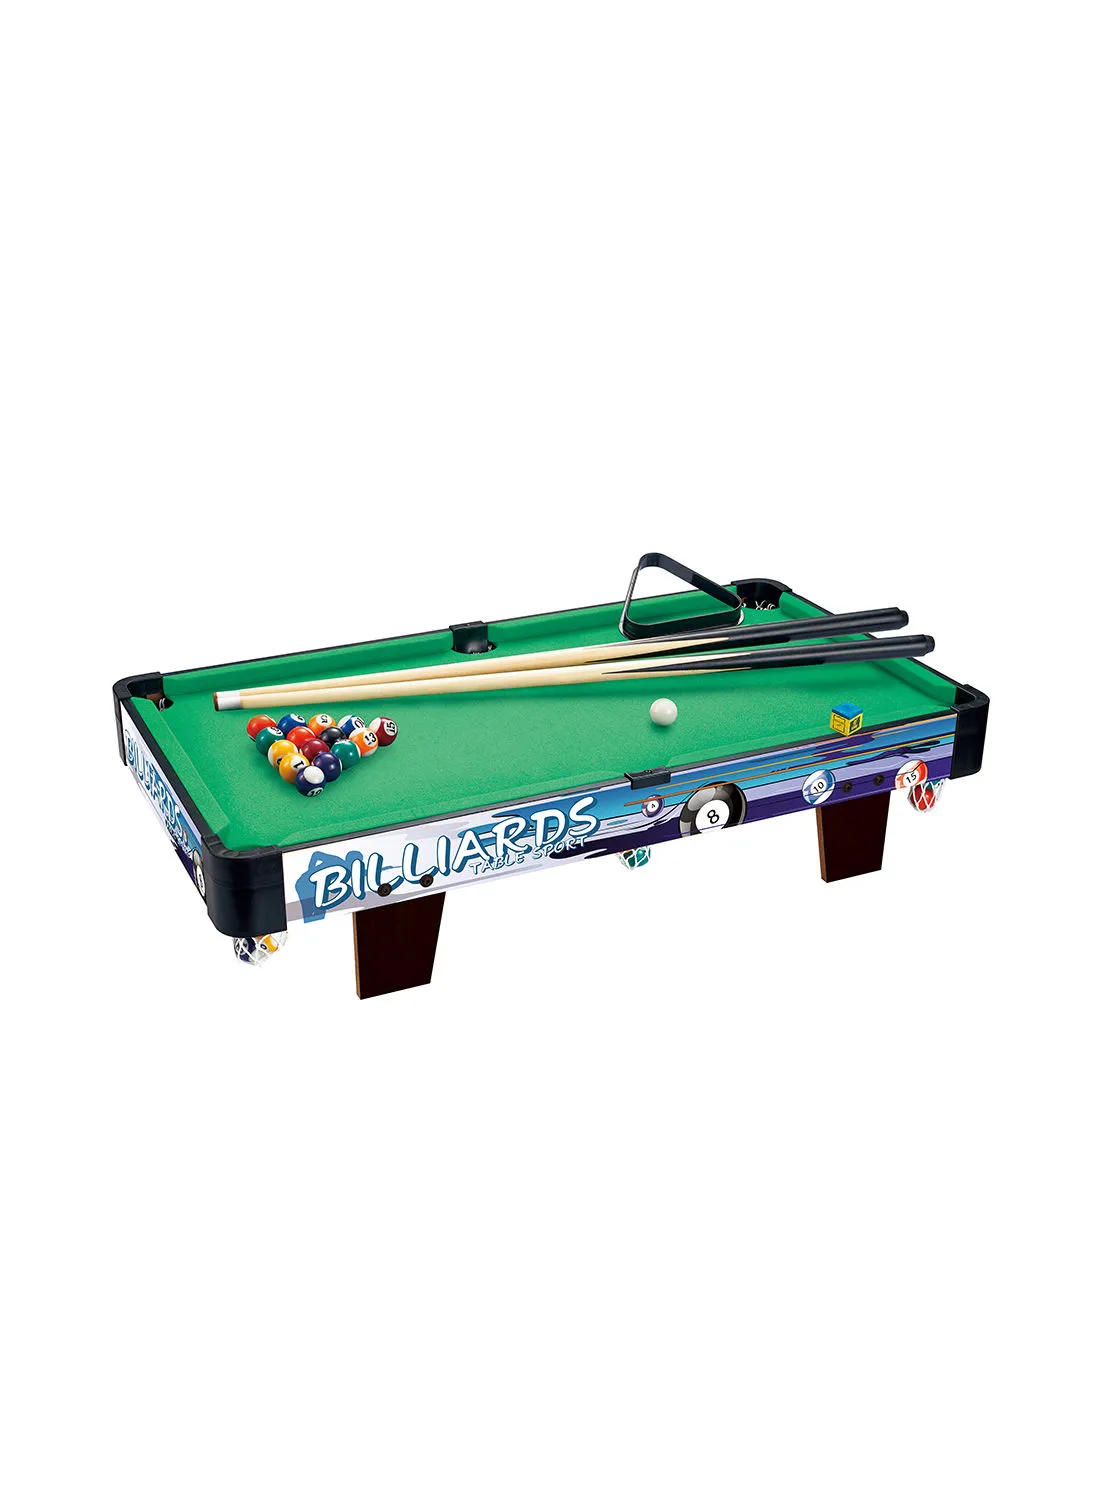 XIANGJUN Billiards Pool Table Game Set 73 x 39.5 x 16cm